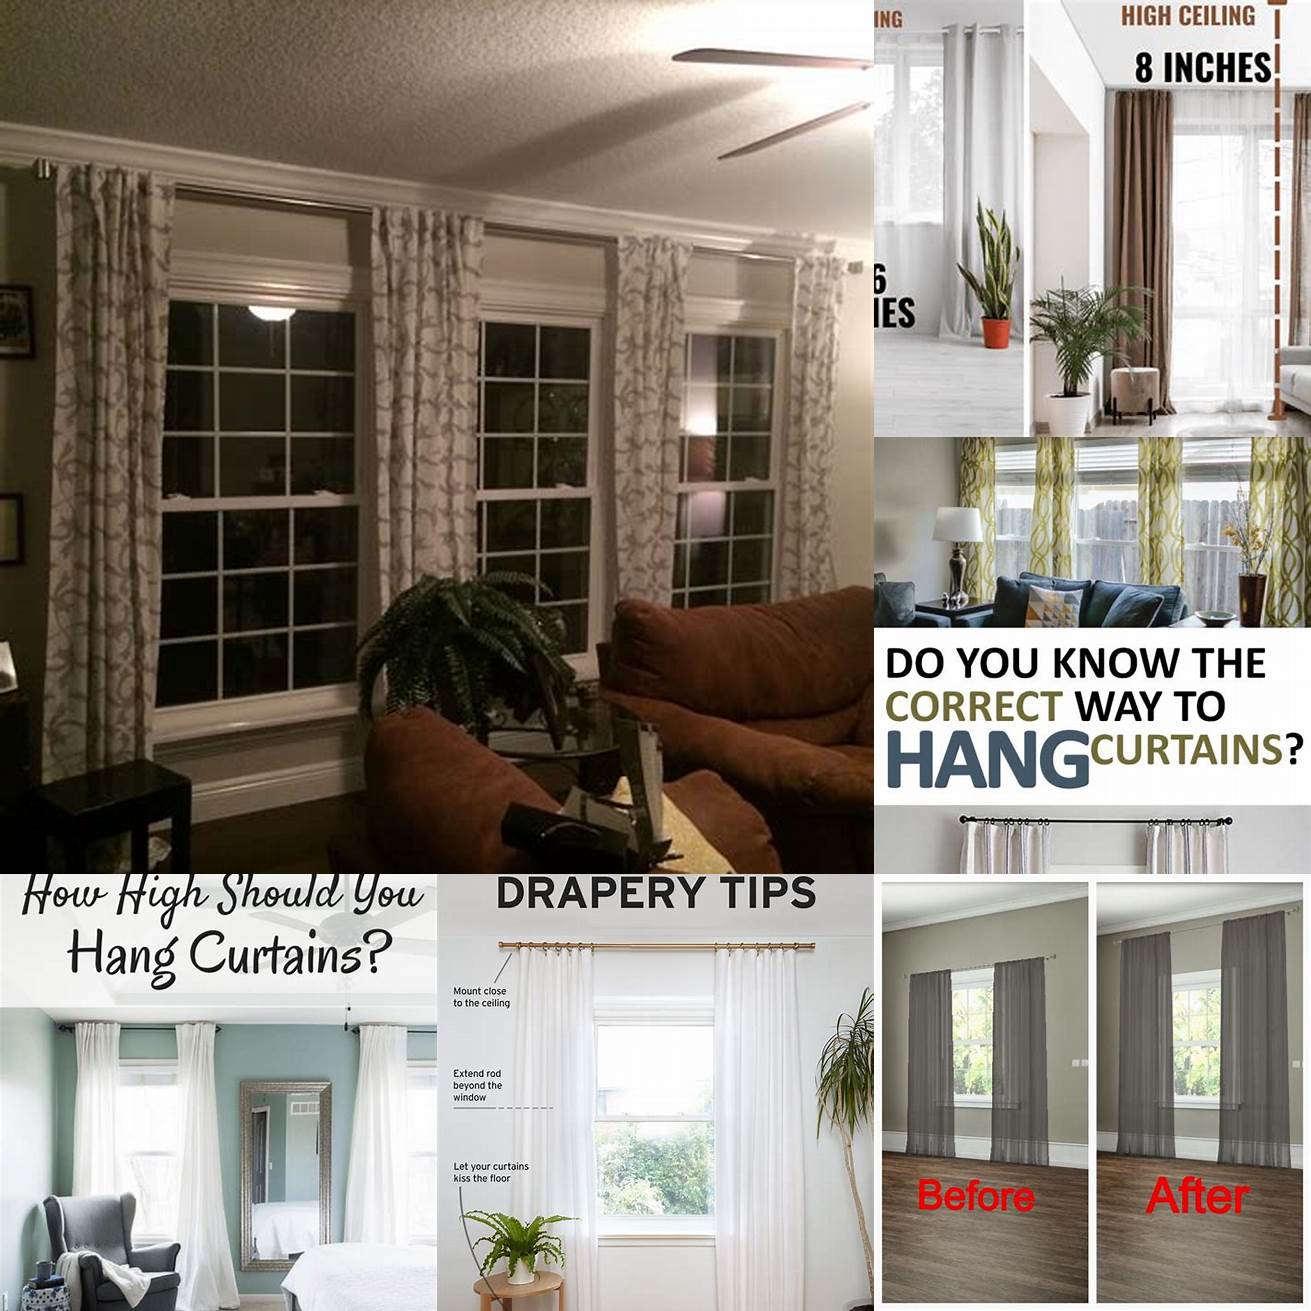 Hang Curtains High